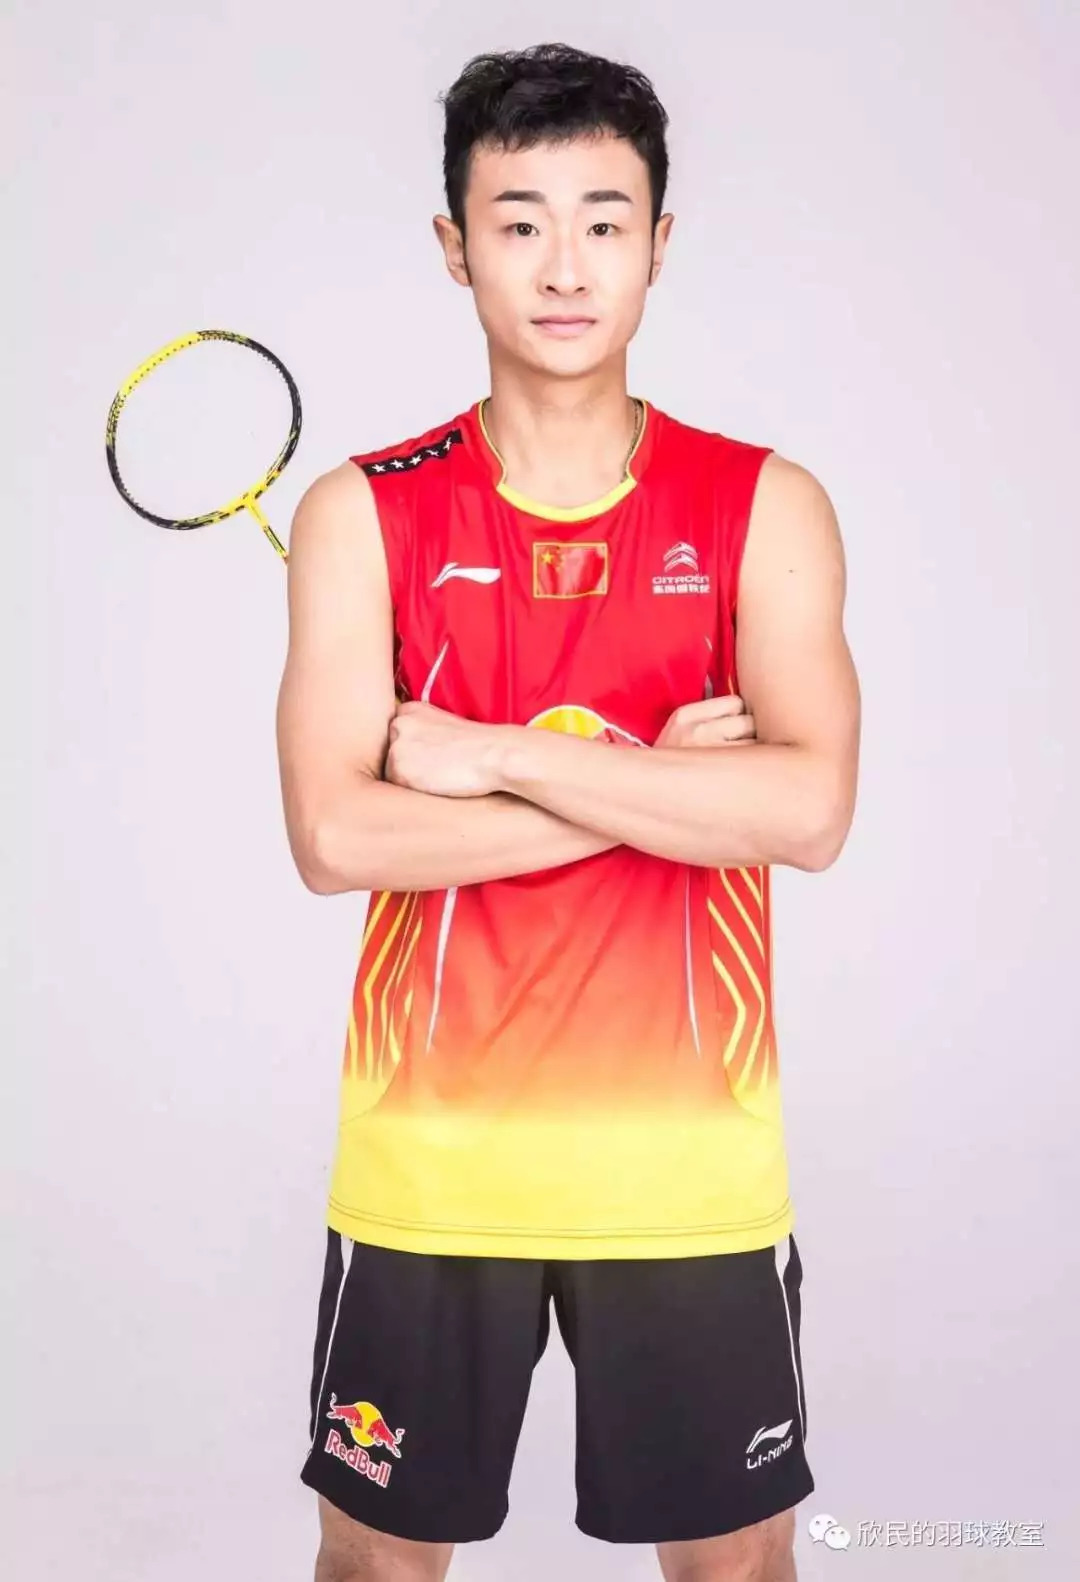 Coach: Qi Zhencheng-上海璨斓网球运动俱乐部官网